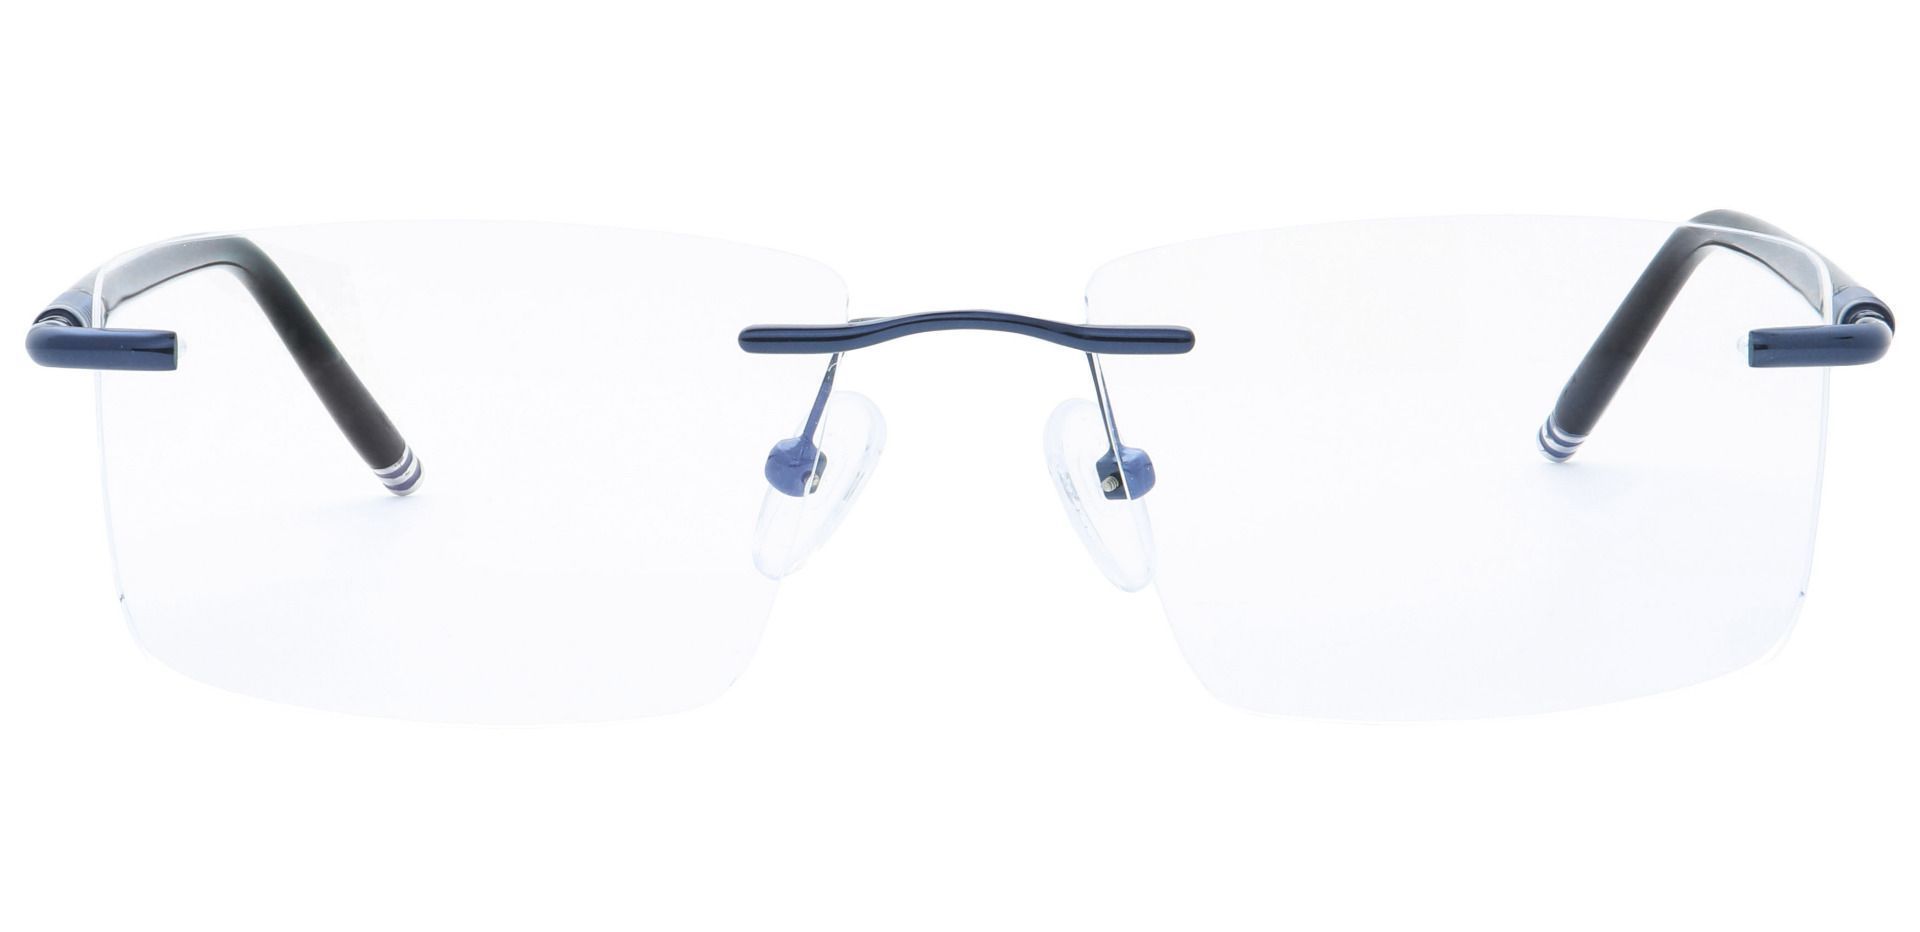 Kenobi Rimless Prescription Glasses - Blue